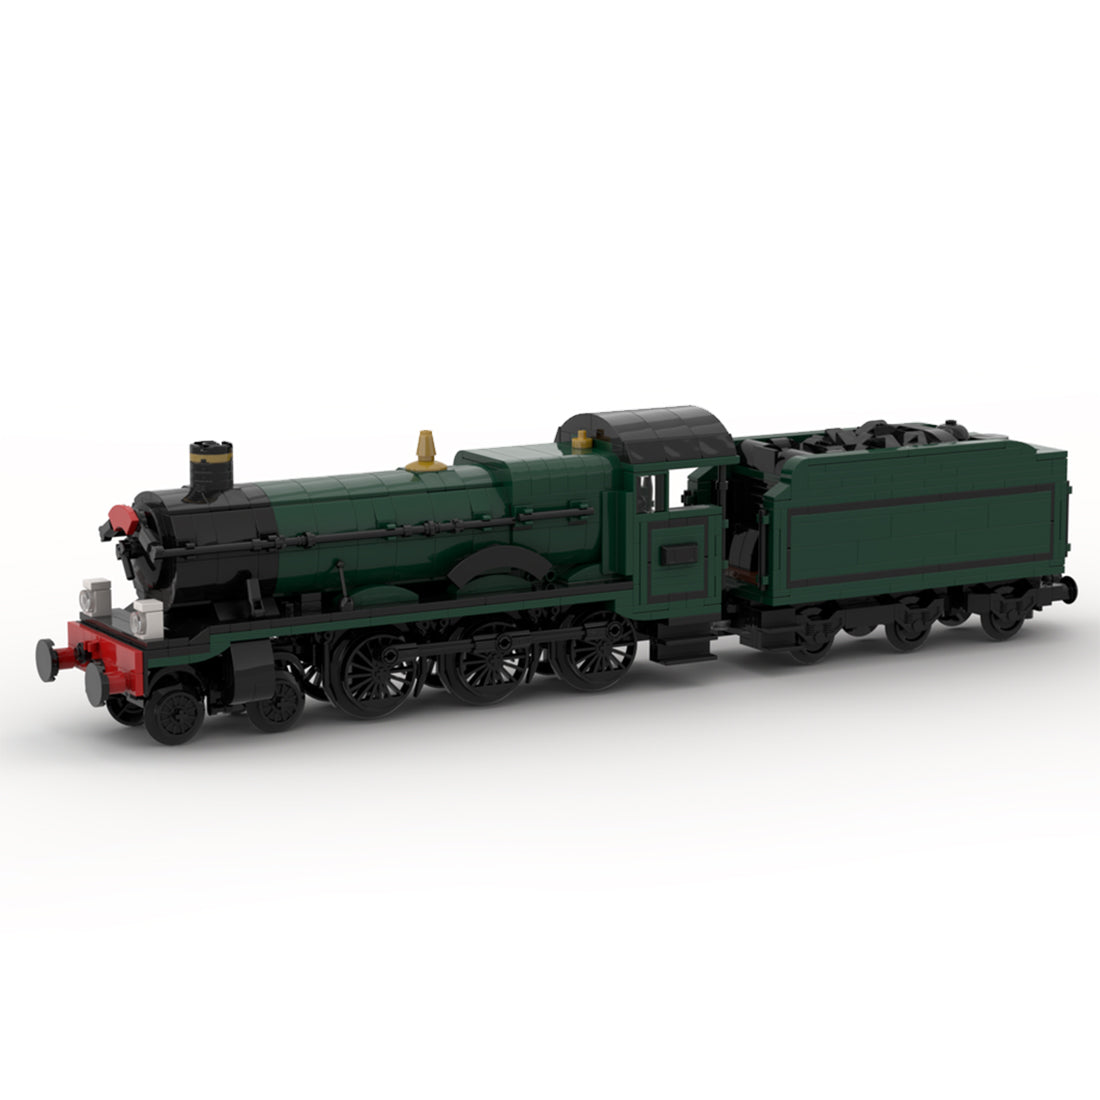 MOC-117927 GWR 8W Hall Class "Kinlet-Hall" Steam Locomotive Building Blocks Set 1009PCS